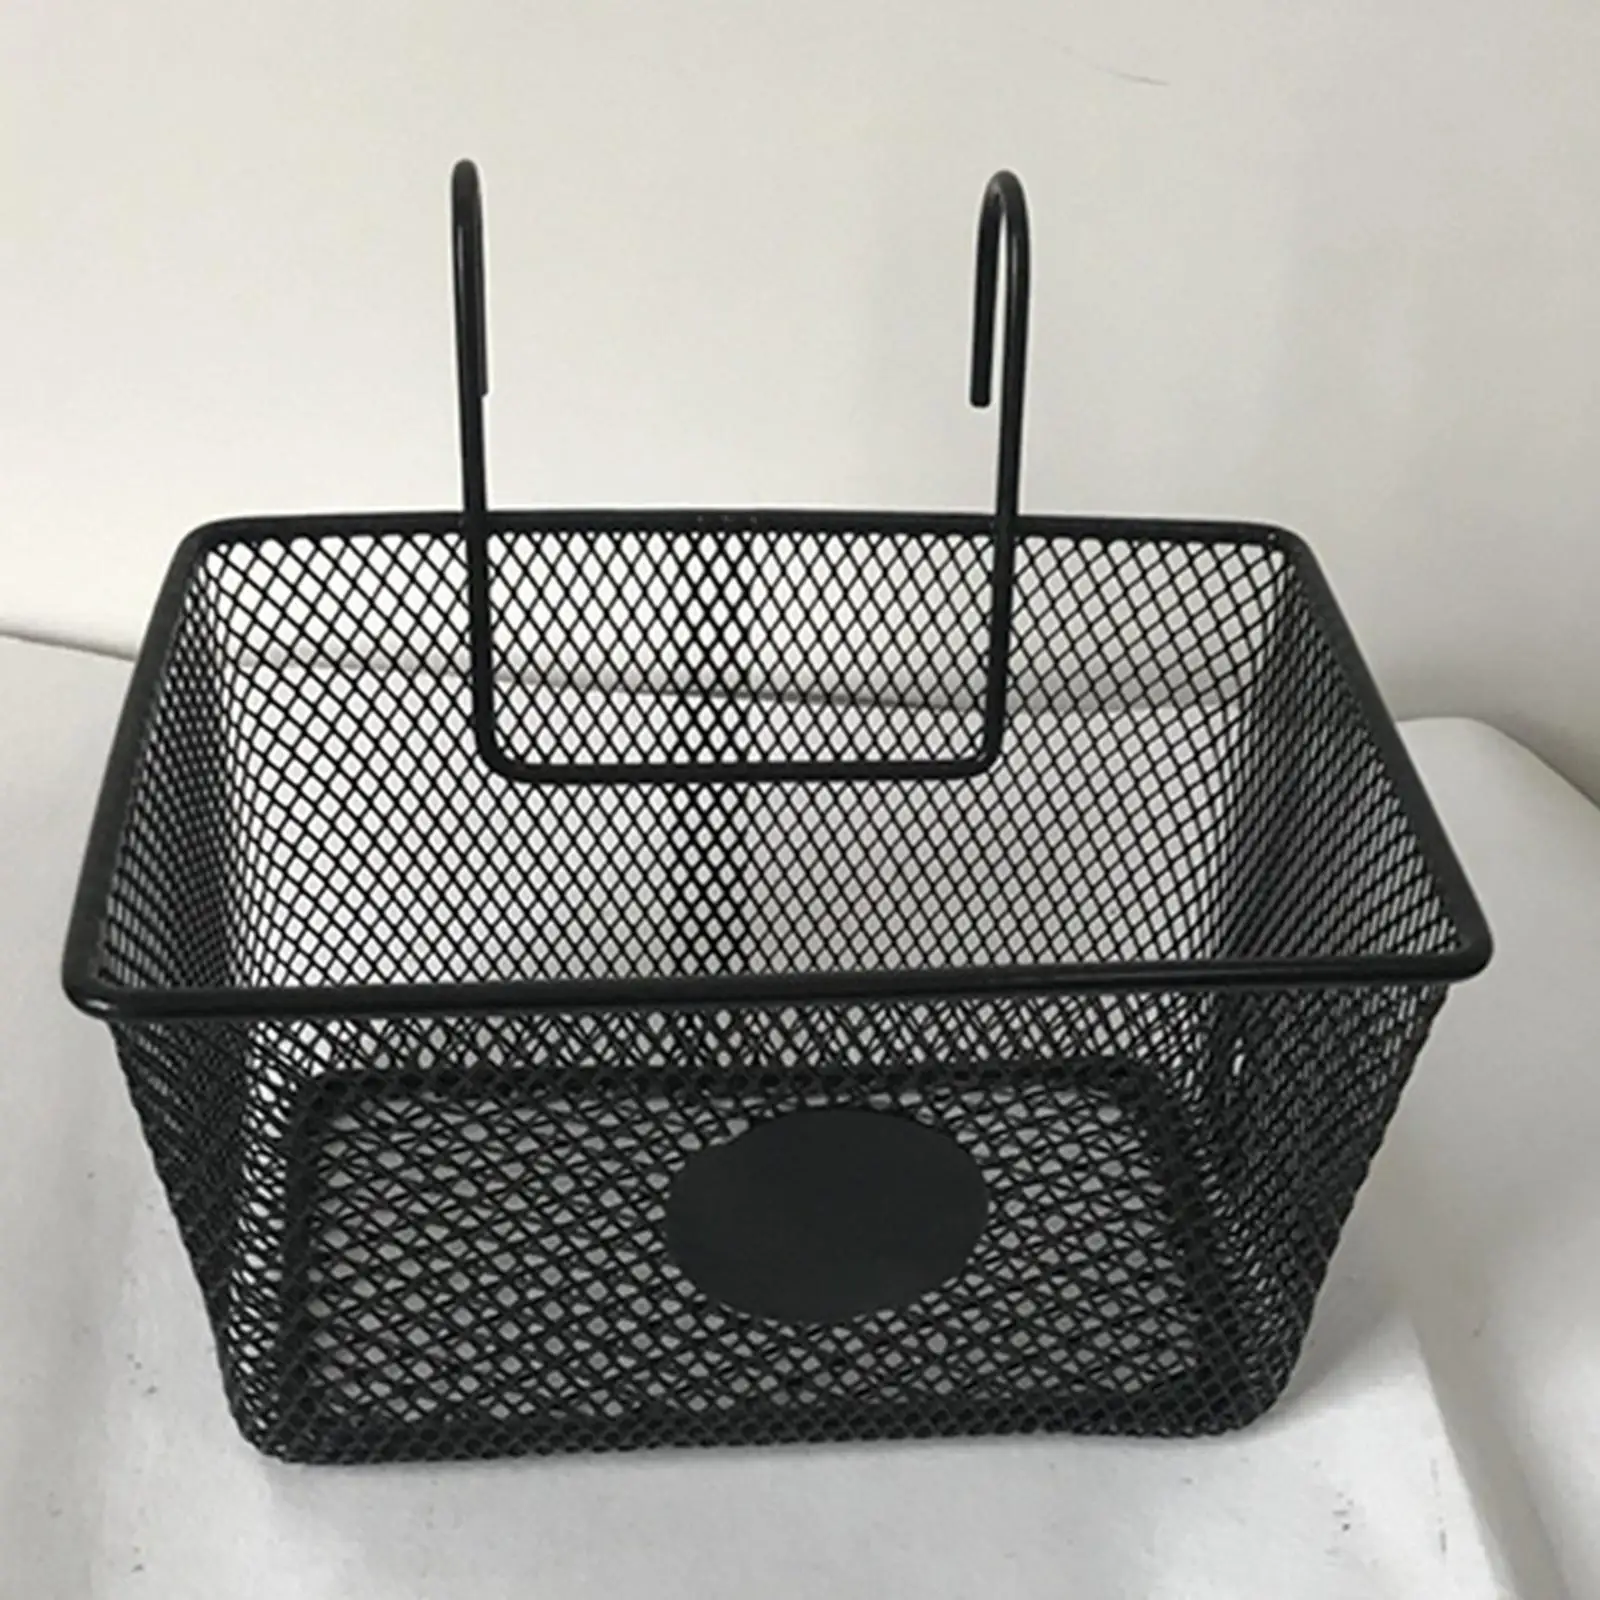 Wire Bike Basket Hanging Retro Style Handlebar Detachable Carry Shopper Large Storage Case Front for Men Outdoor Women